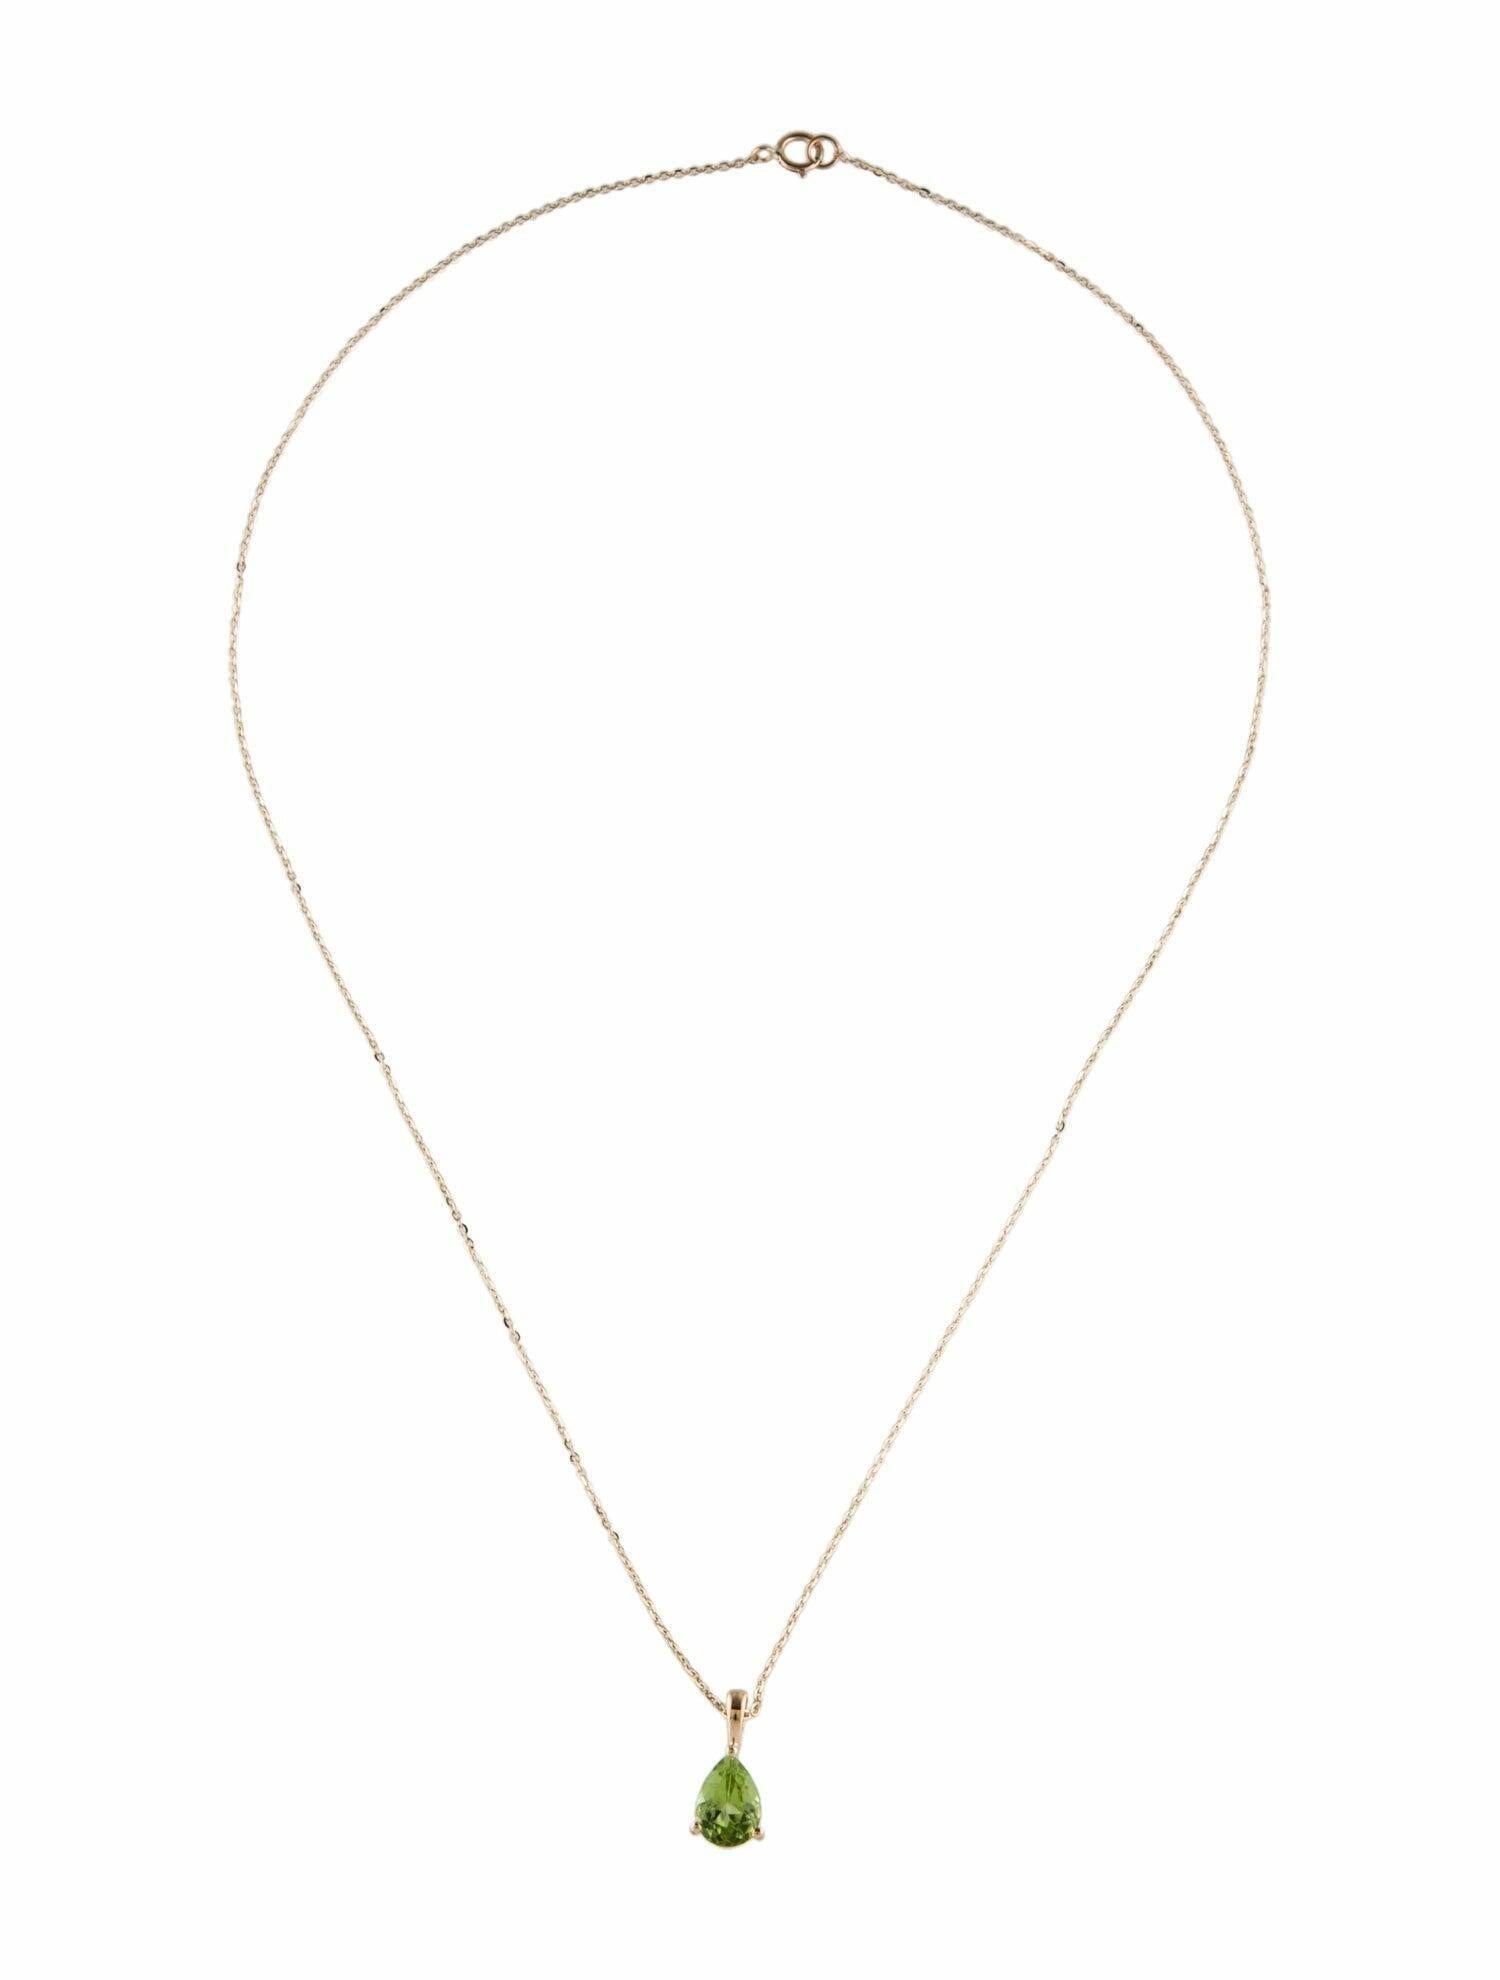 Pear Cut 14K Yellow Gold Peridot Pendant Necklace - Pear Modified Brilliant Cut For Sale